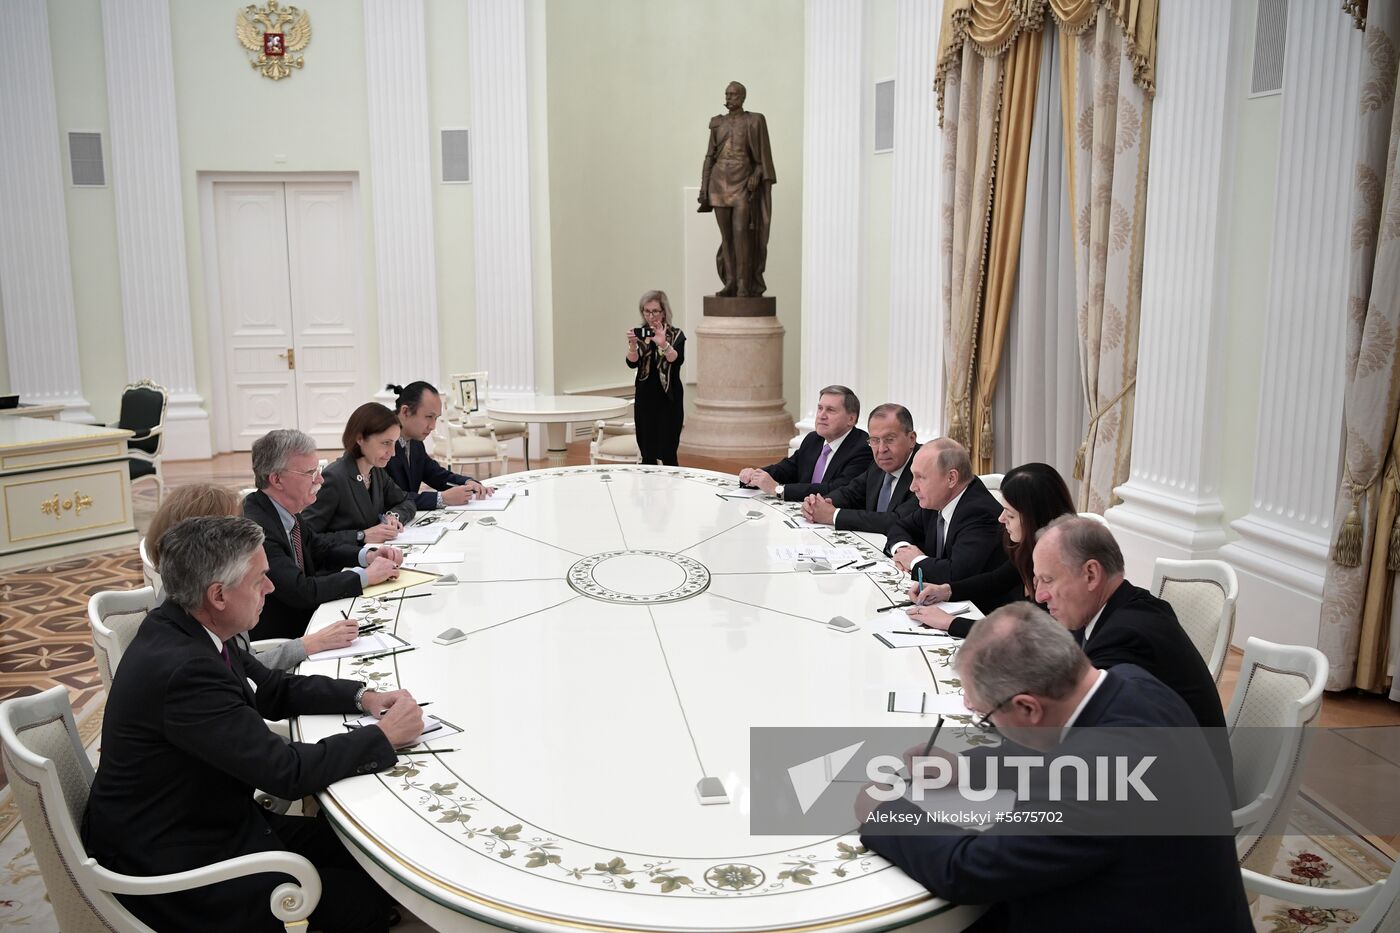 President Putin meets with US National Security Advisor John Bolton